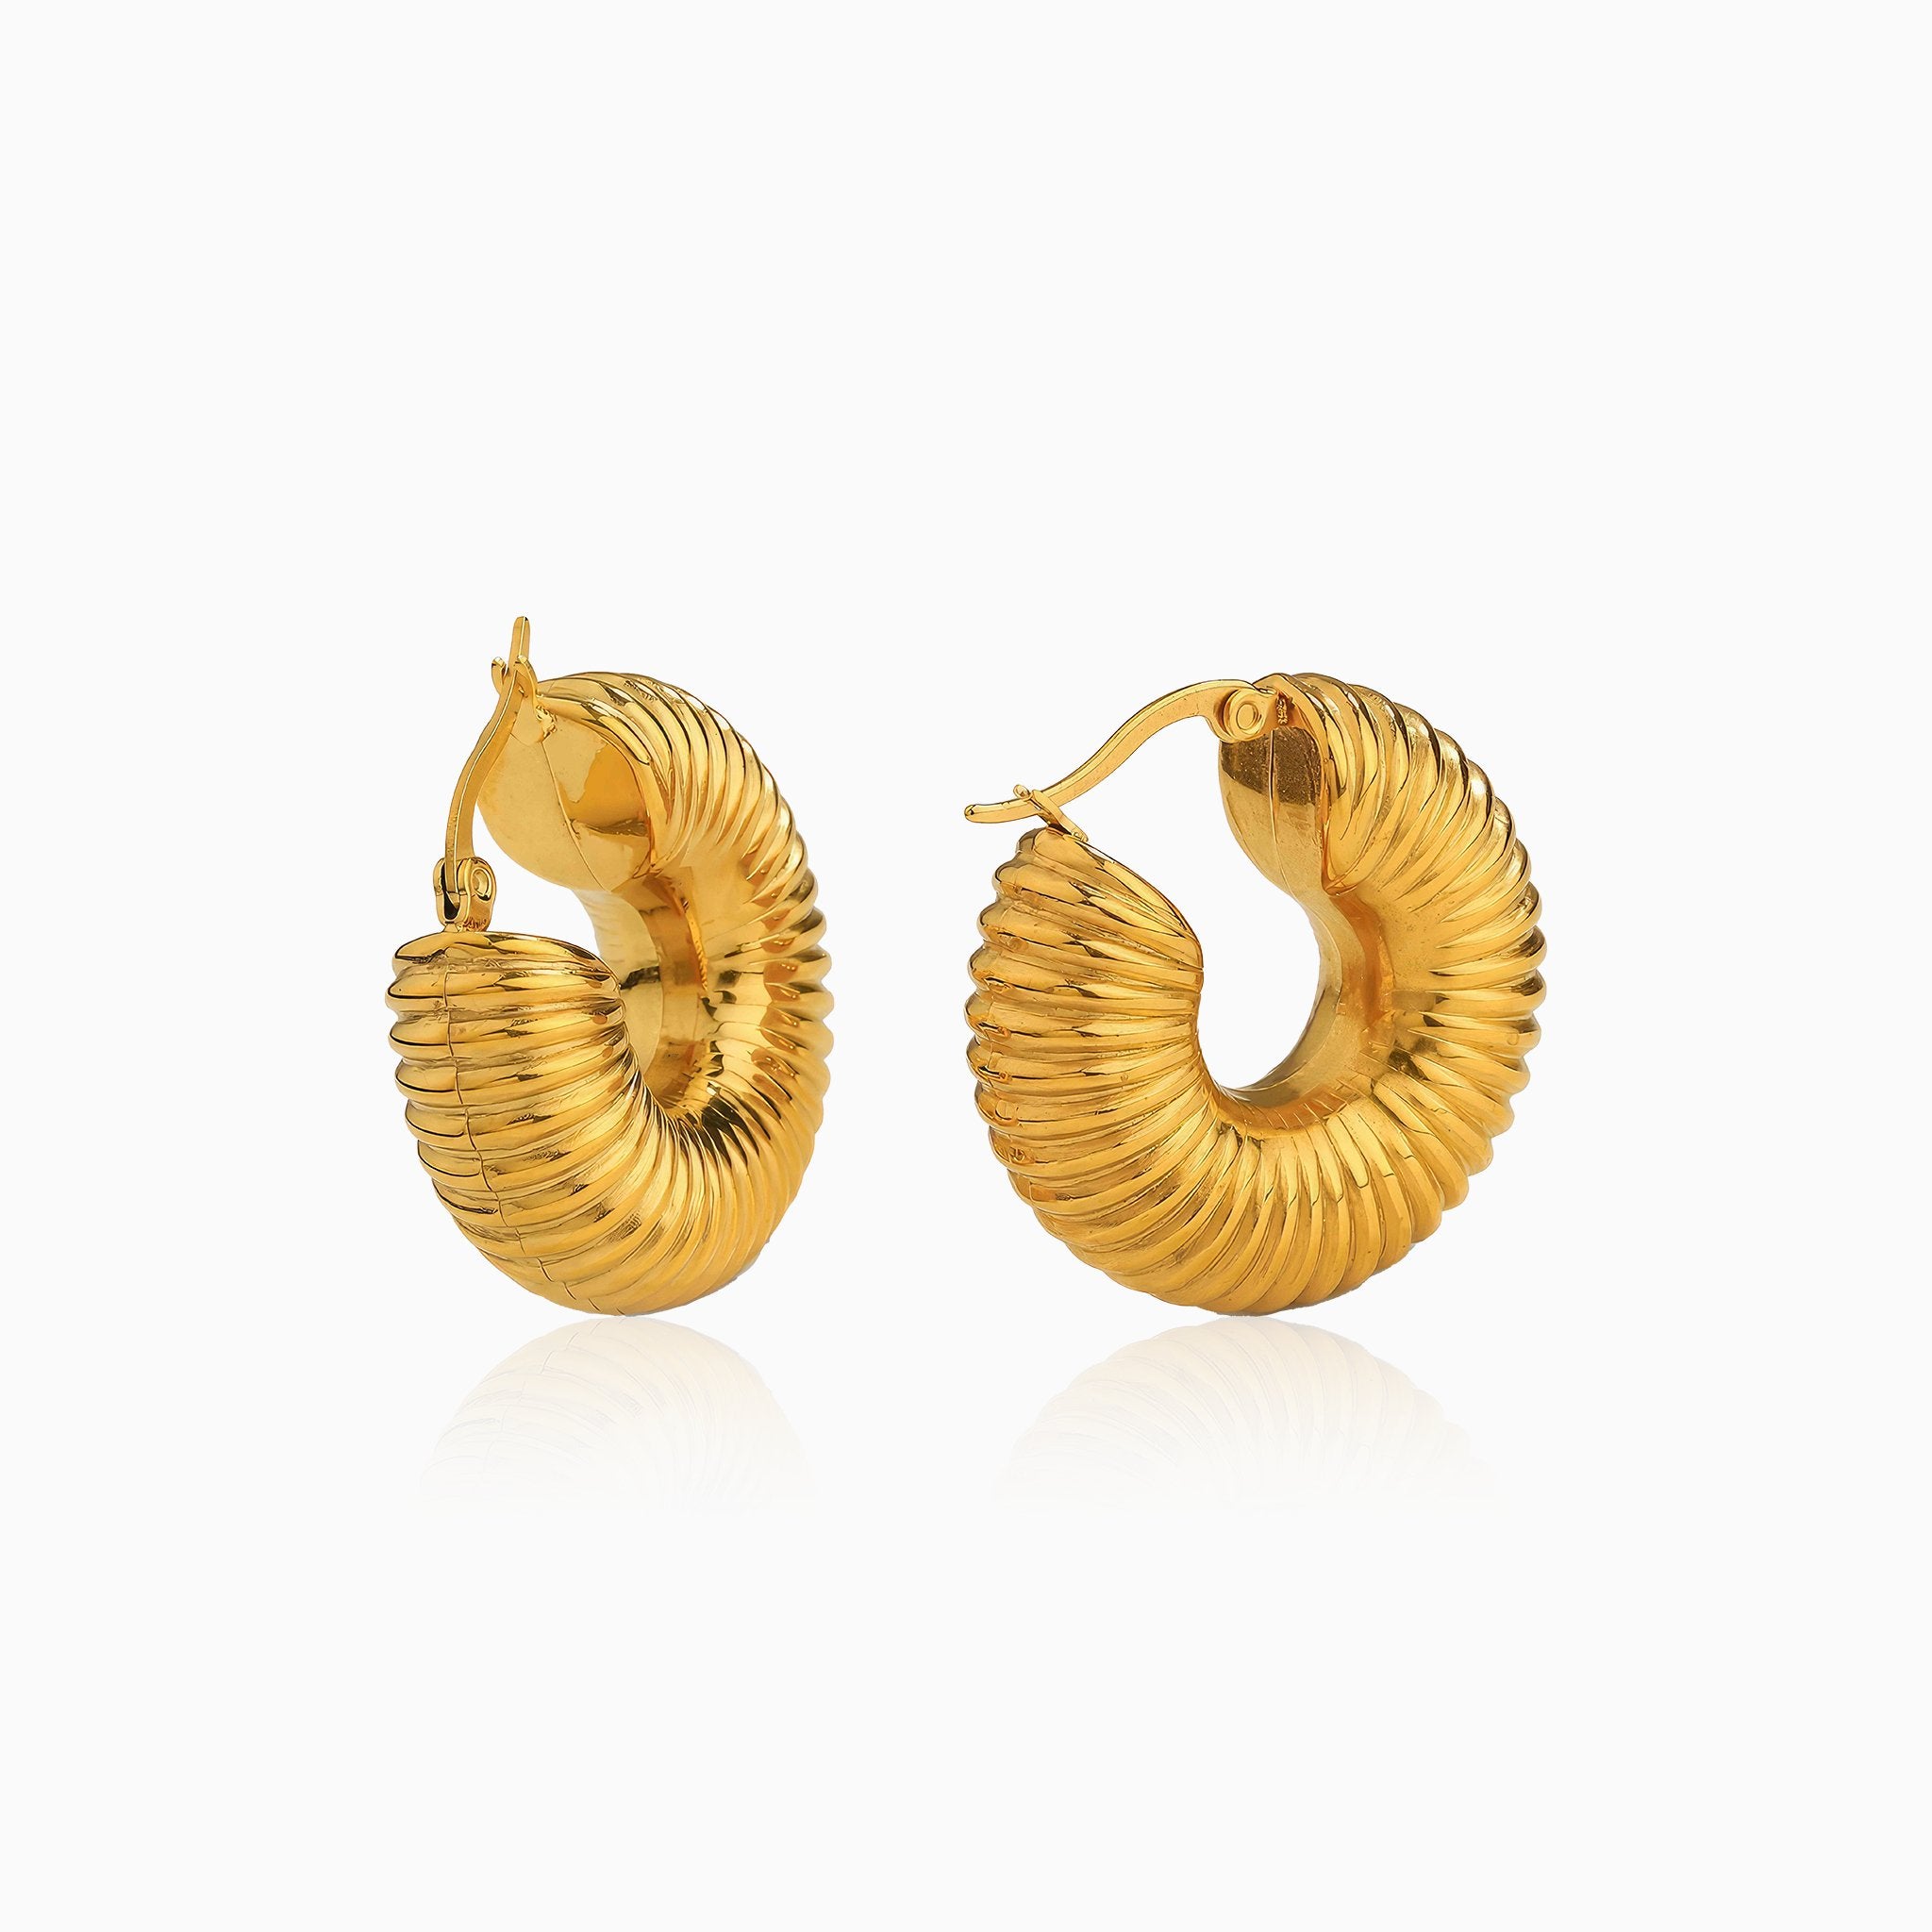 Textured Hoop Earrings - Nobbier - Earrings - 18K Gold And Titanium PVD Coated Jewelry